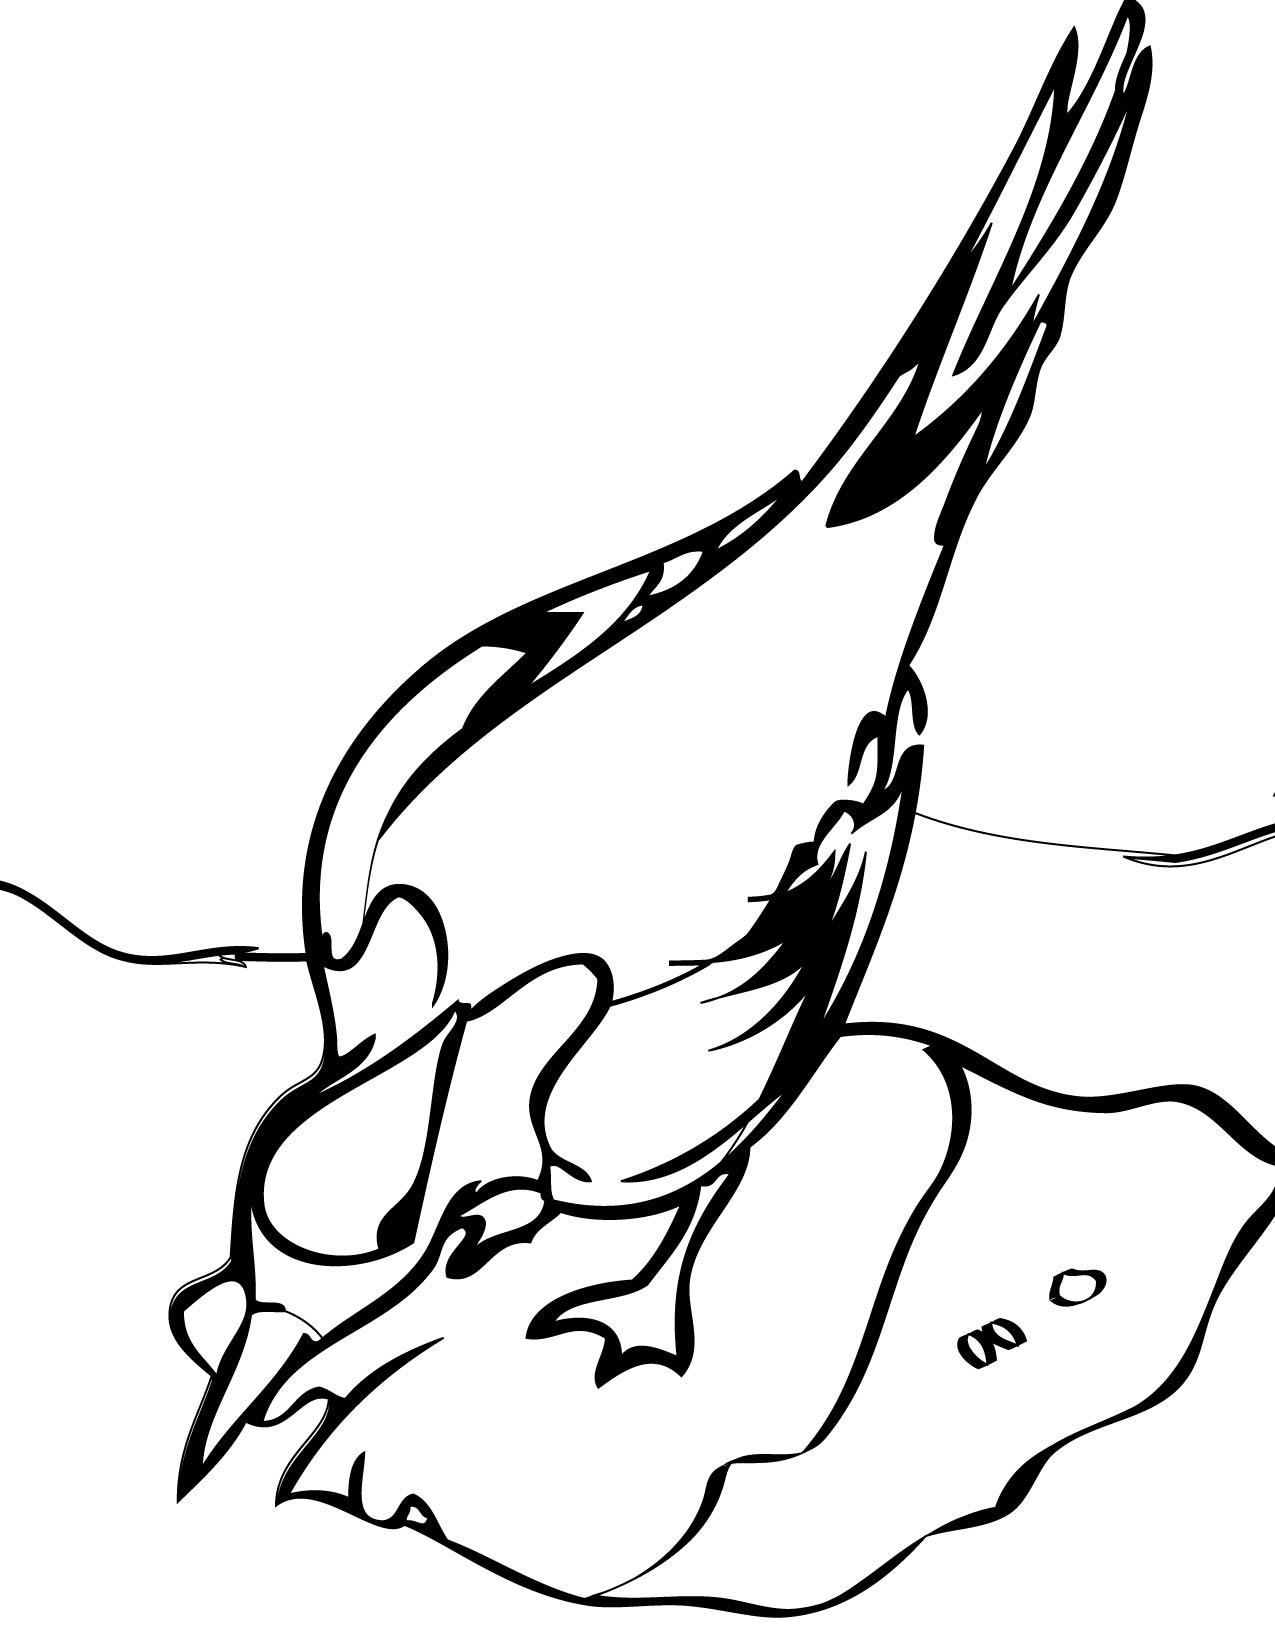 Tern coloring #4, Download drawings